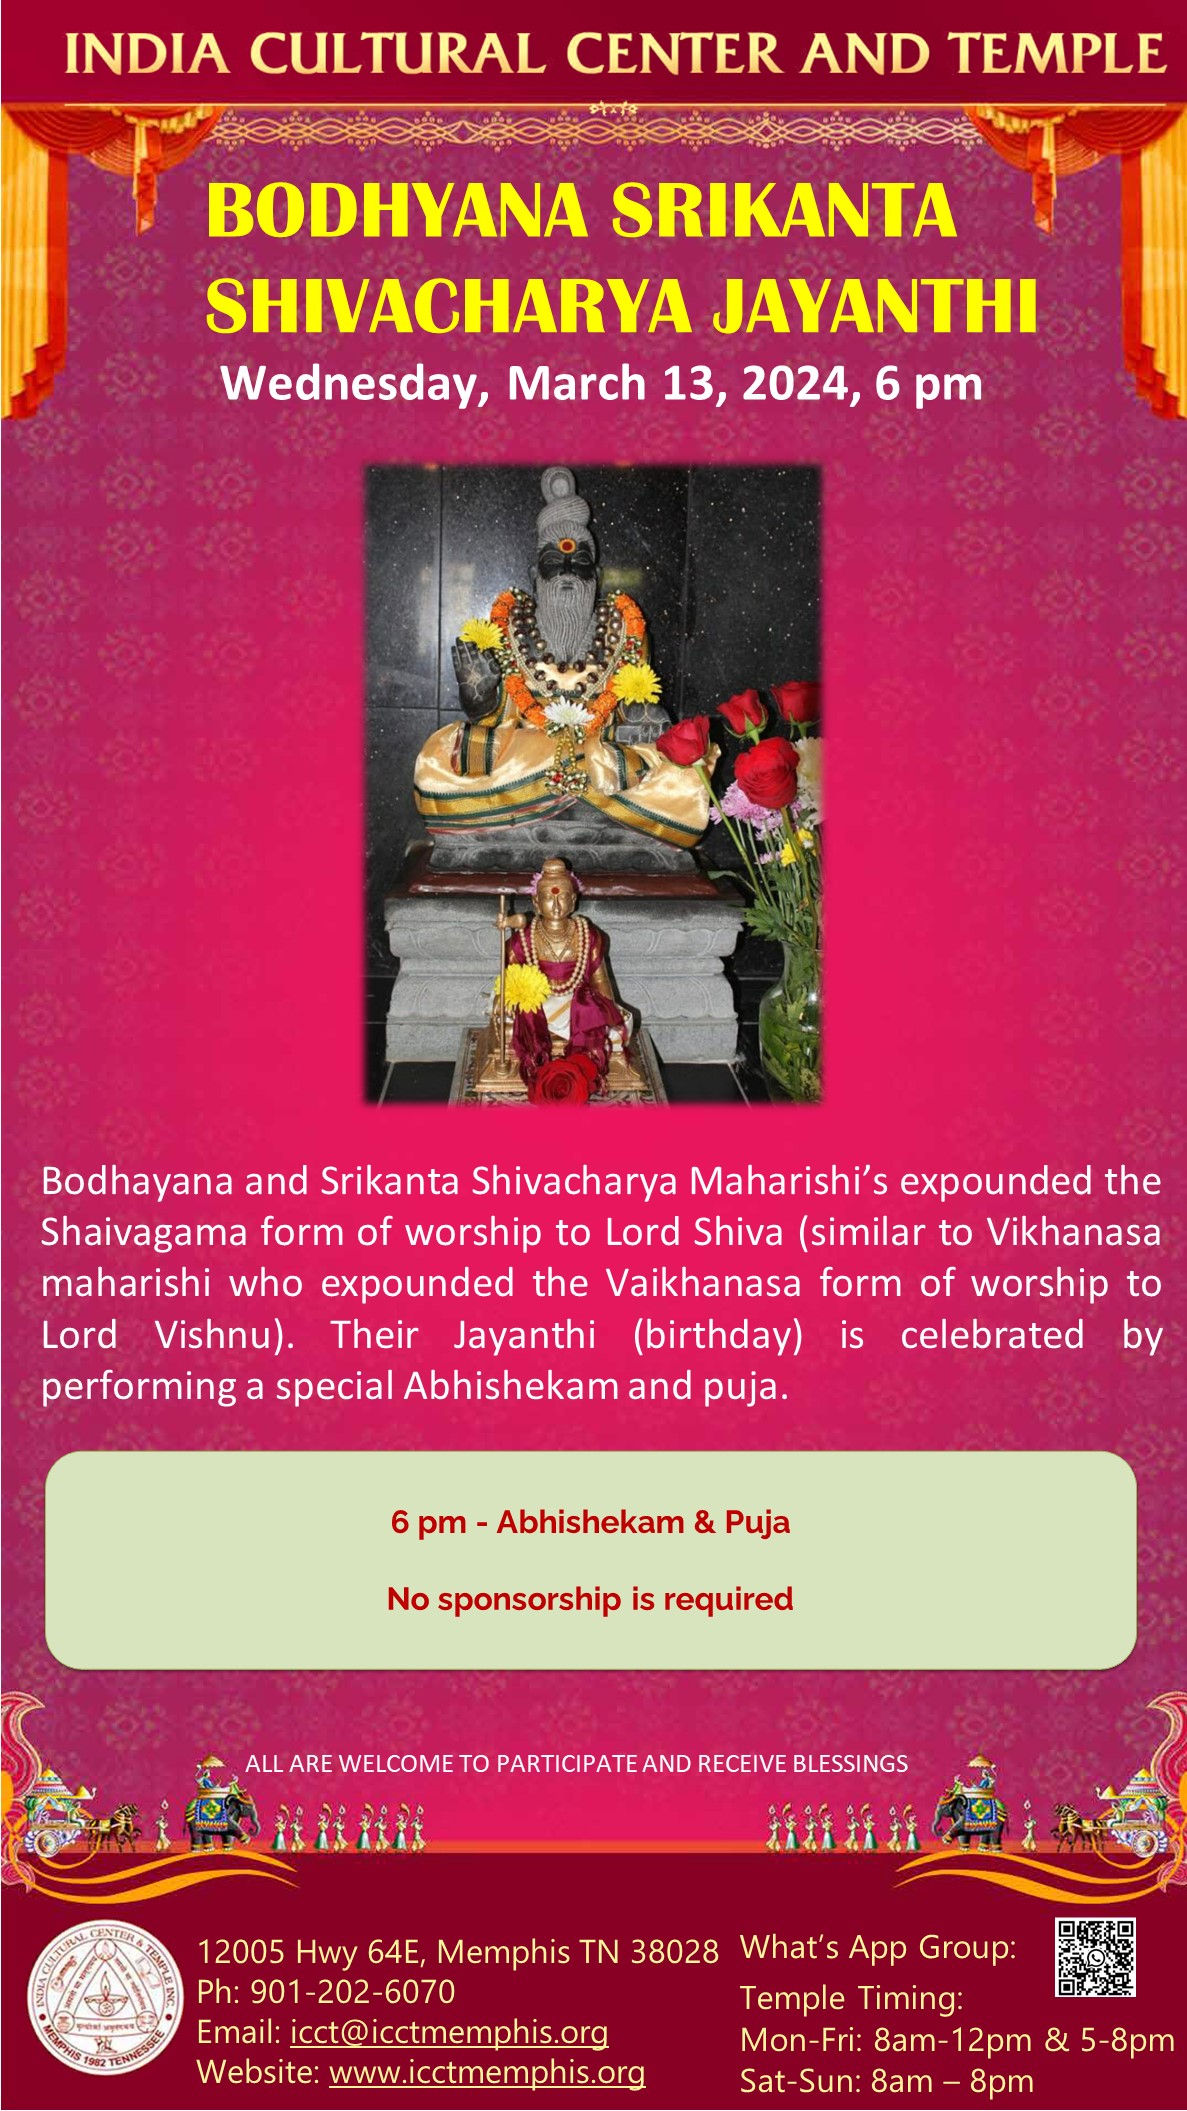 Bodhayana Srikanta Shivacharya Jayanthi